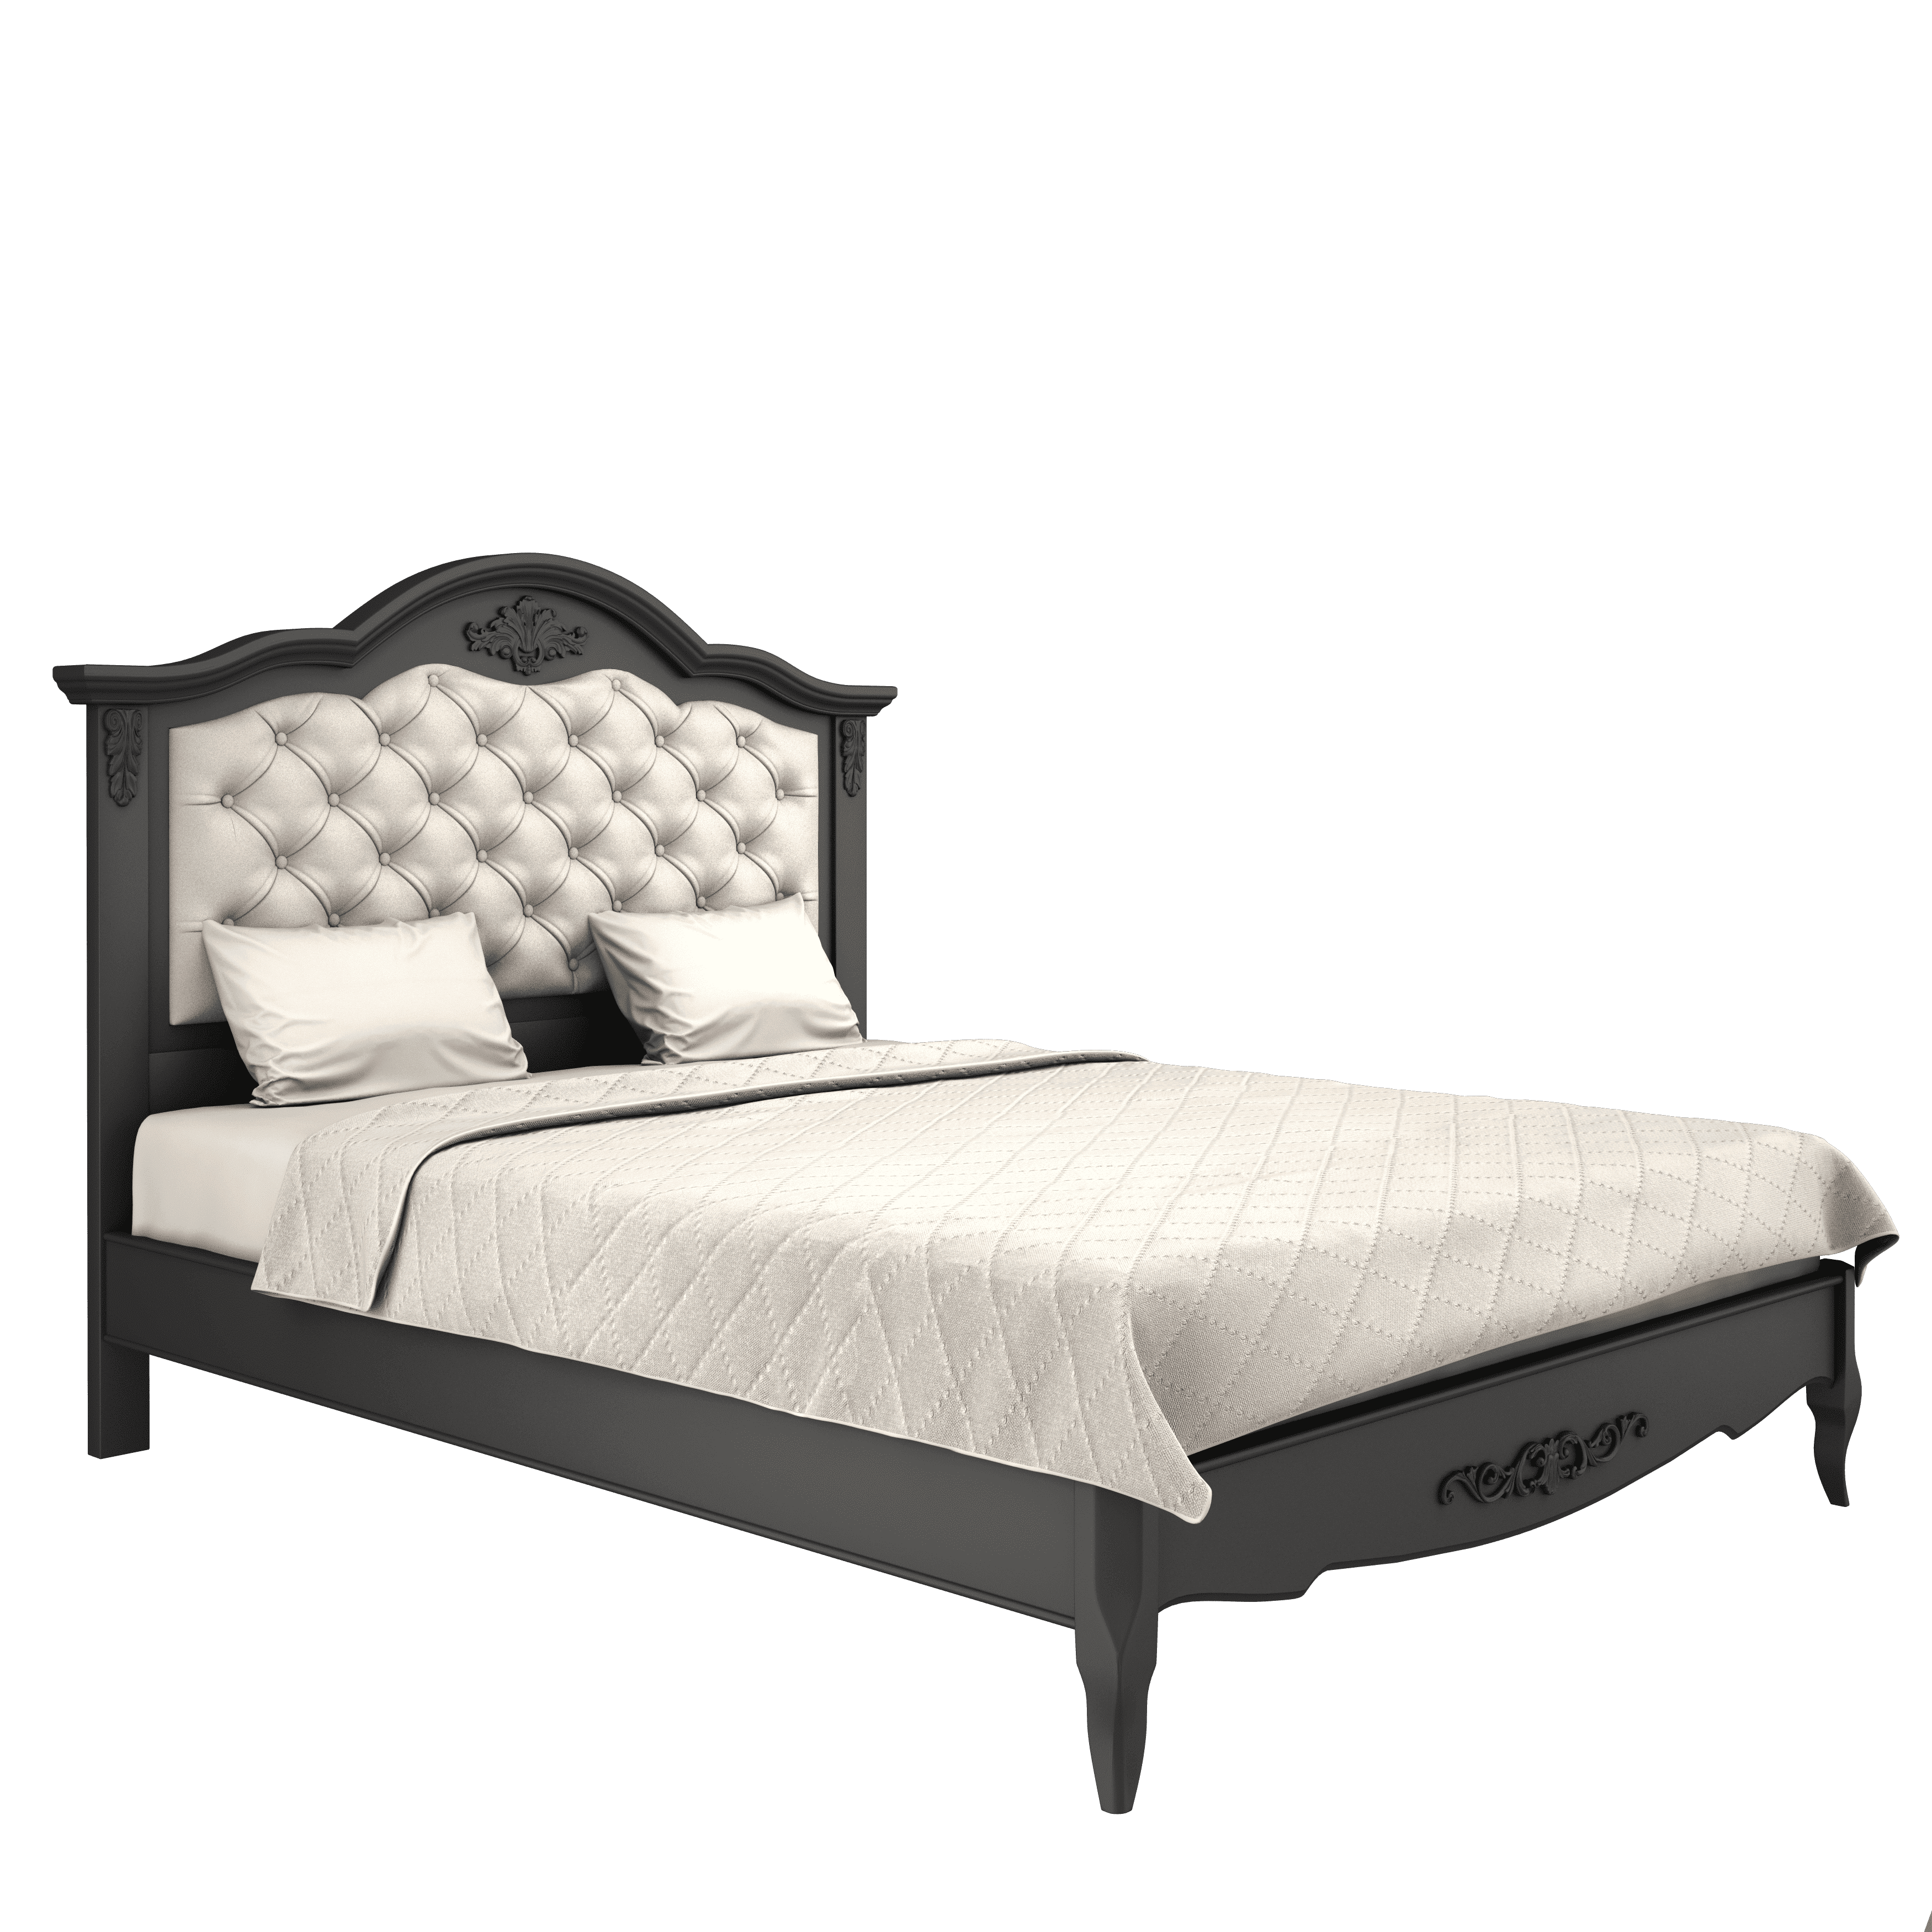 Кровать Aletan Provence, односпальная, 120x200 см, цвет: черный, размер 138х211х138 (B212BL)B212BL